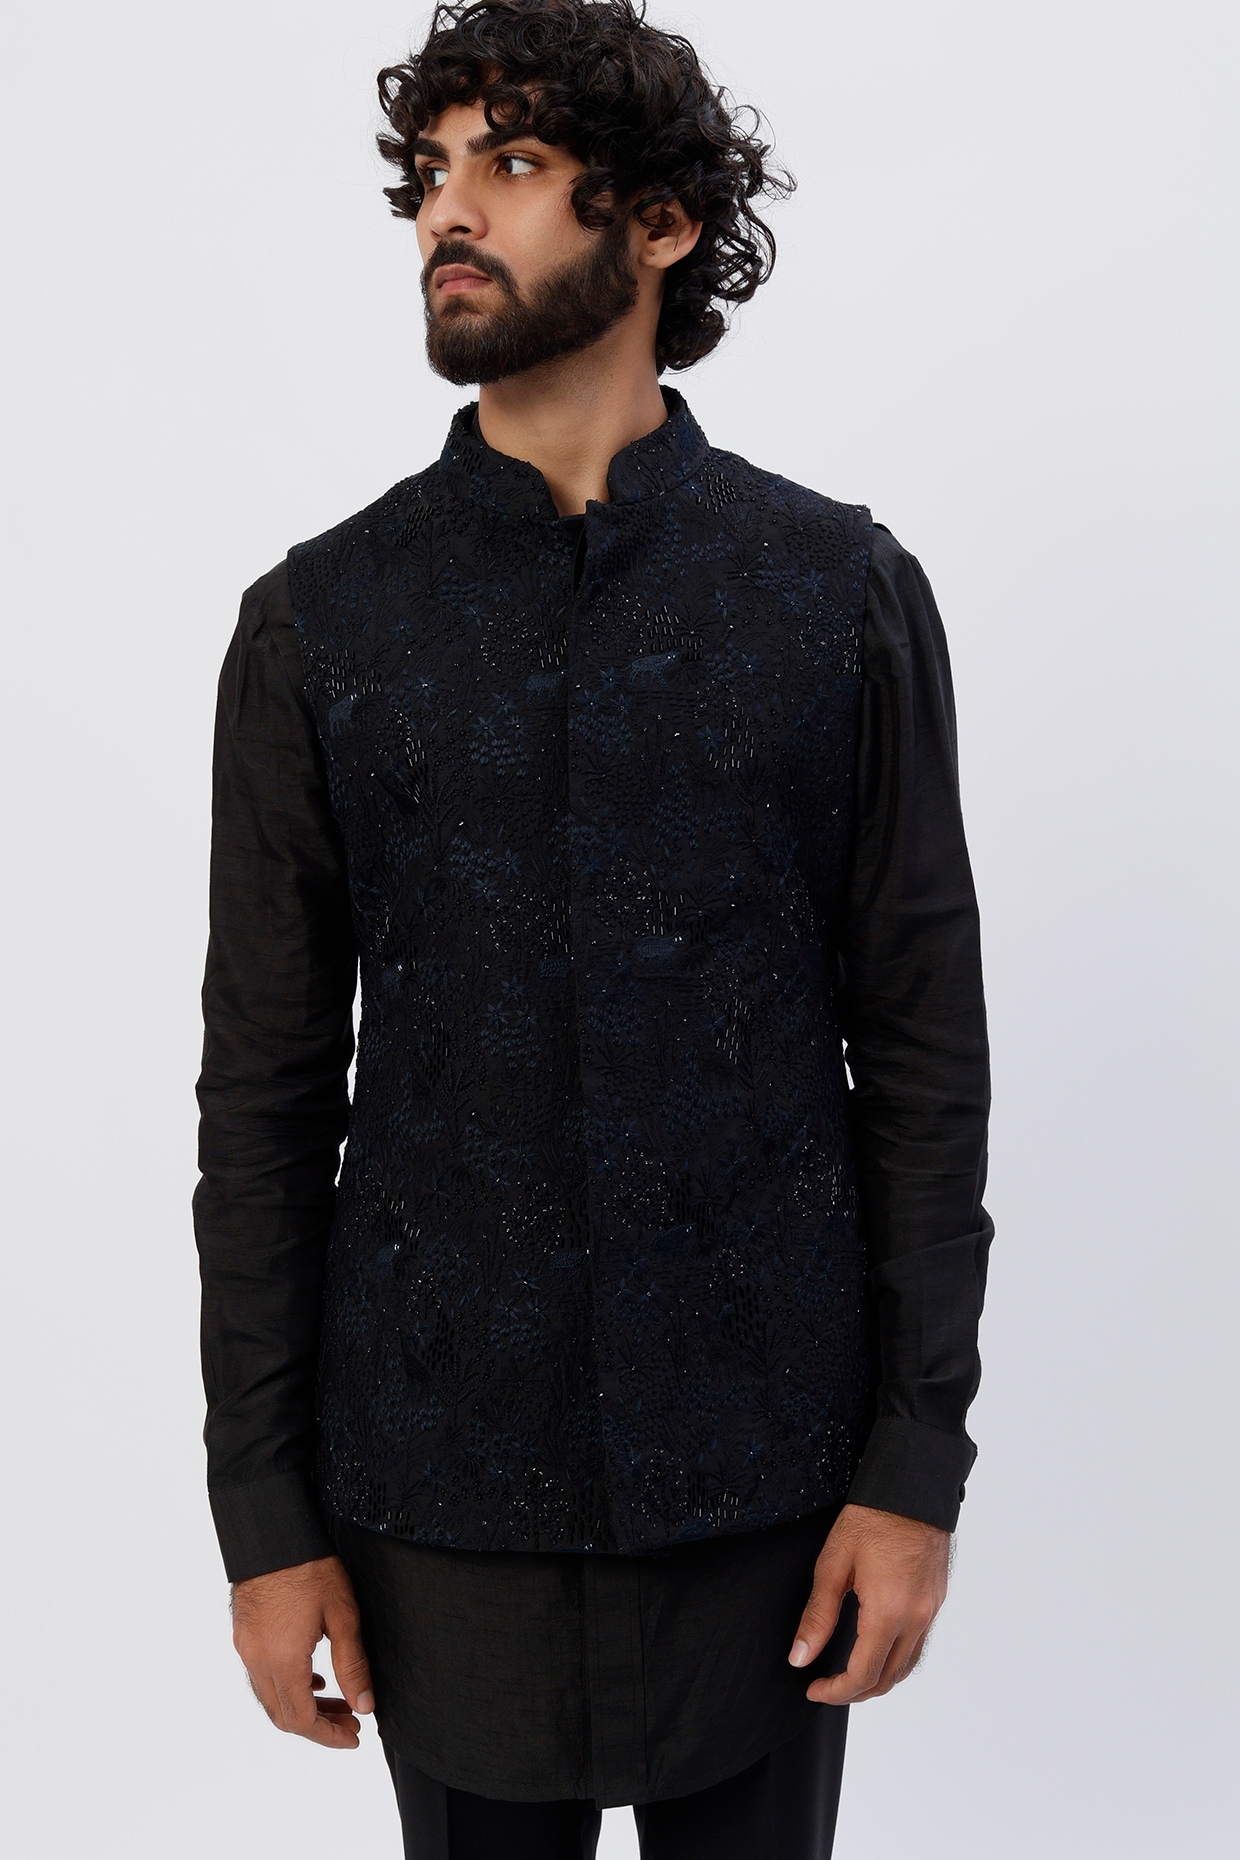 Black Colour Art Silk Fabric Party Wear Kurta Pajama Jacket.